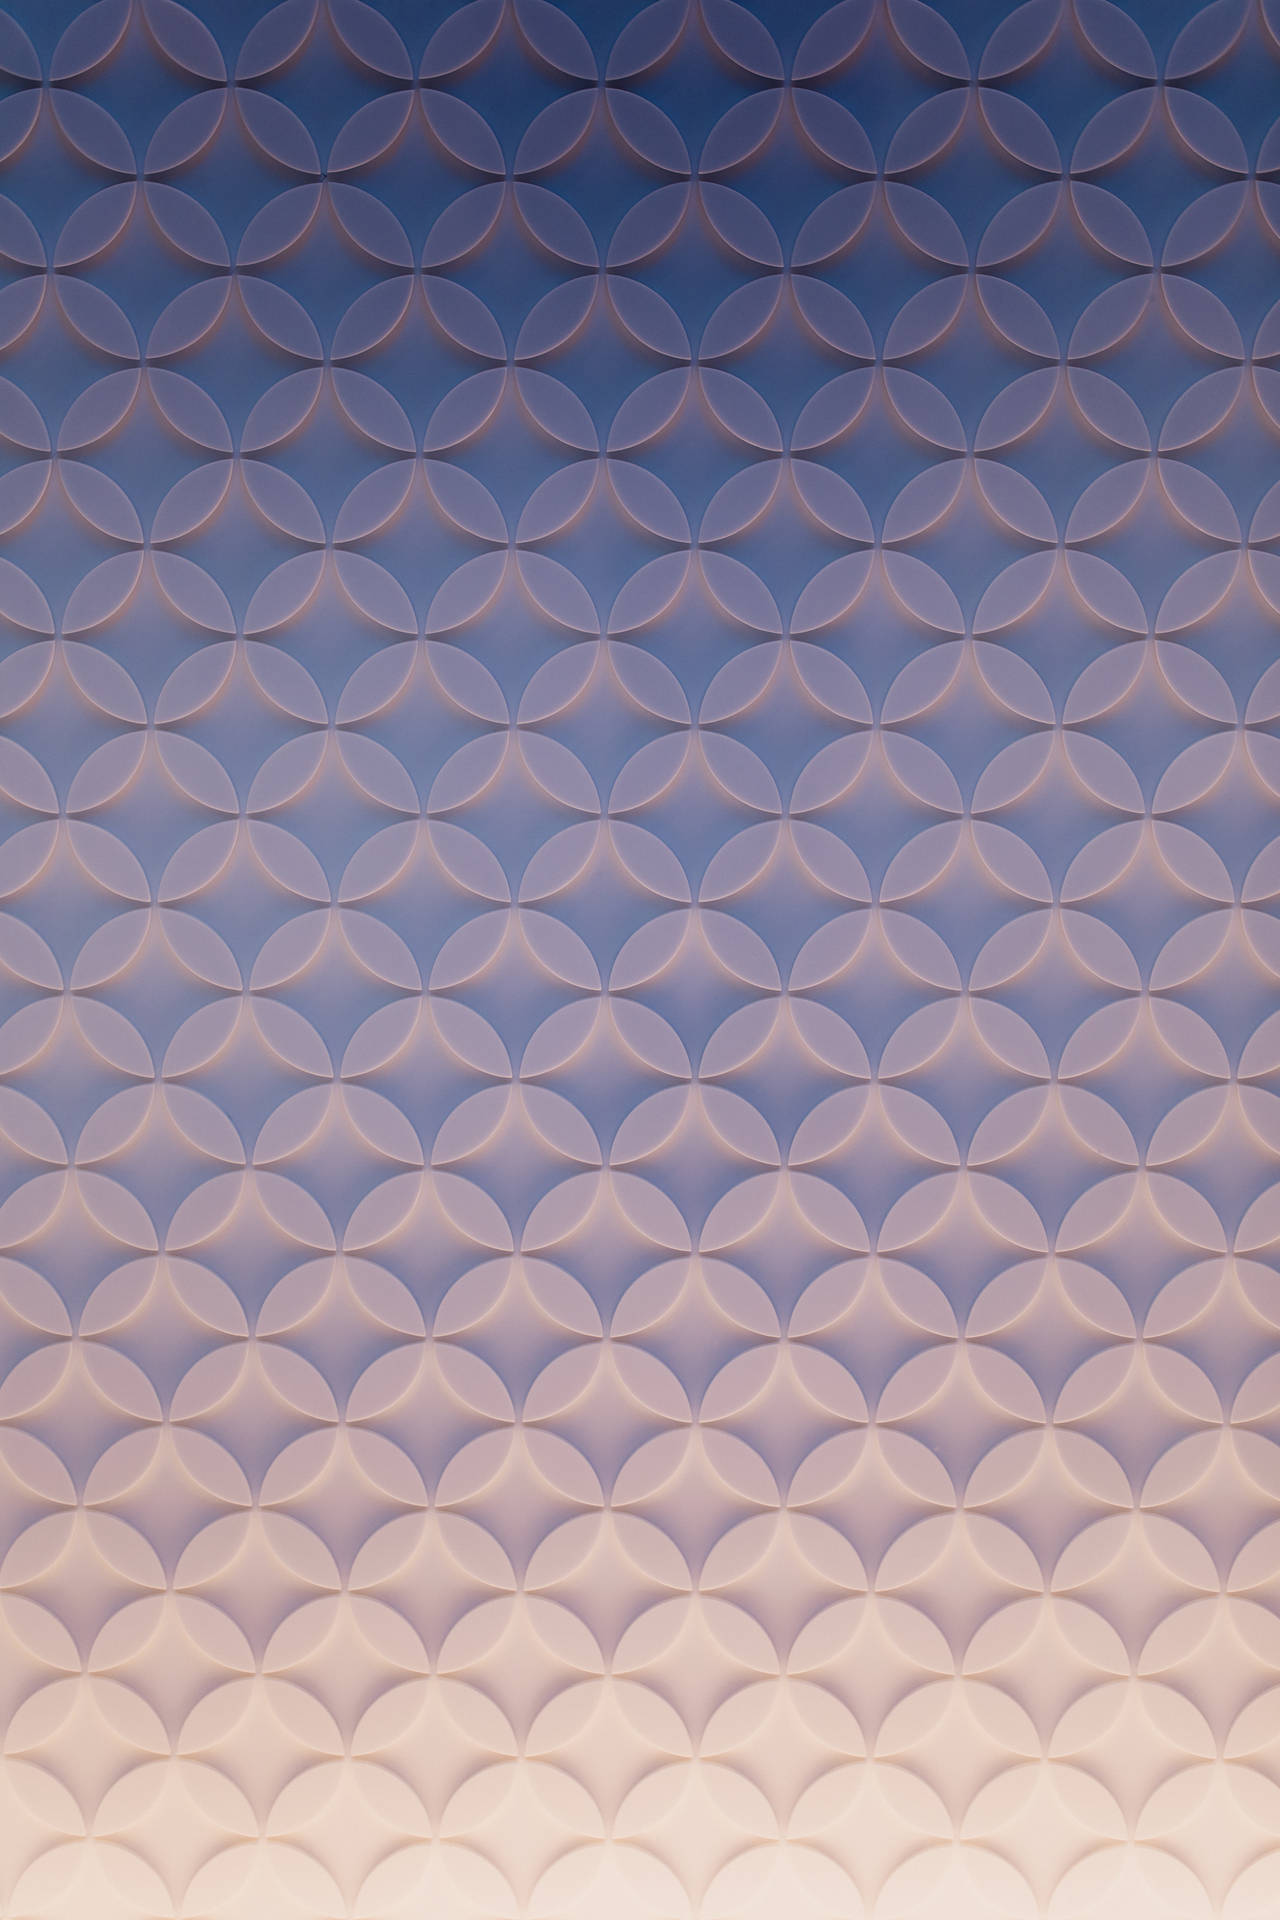 Caption: Pastel Geometric Cool Pattern